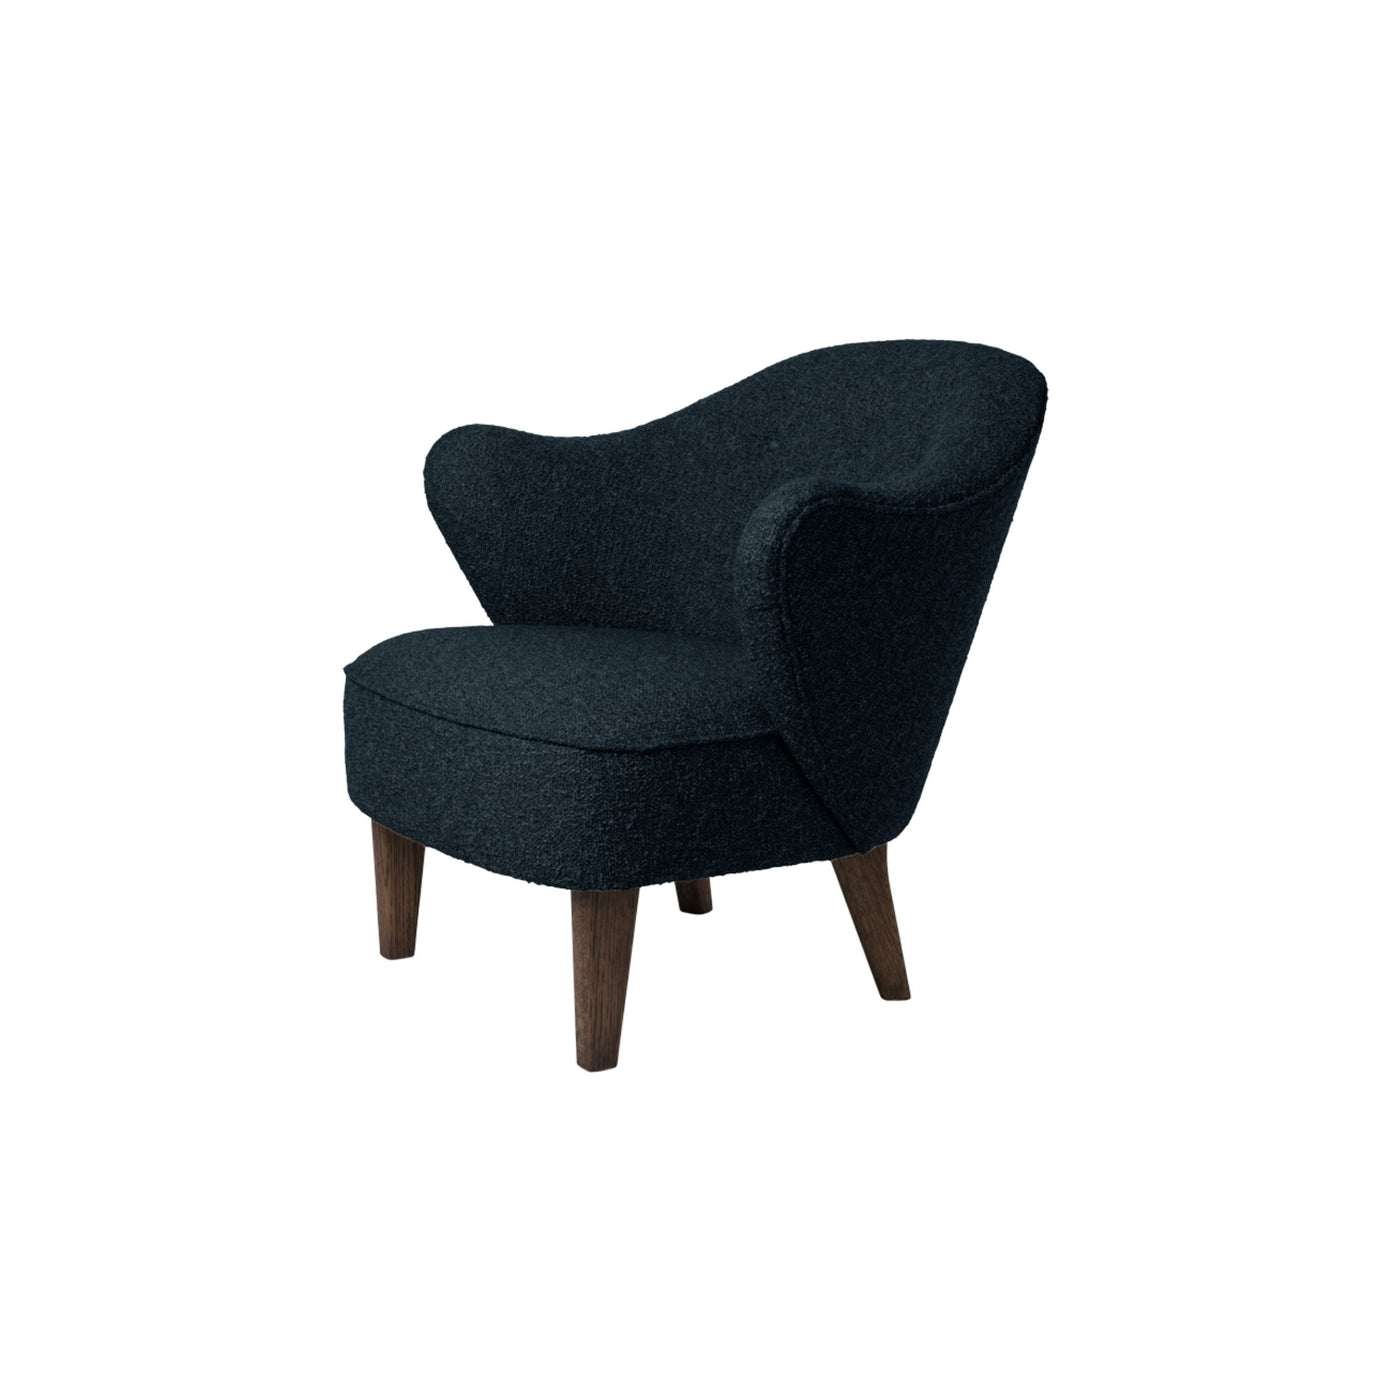 audo Ingeborg armchair. Made to order from someday designs #colour_vidar-554